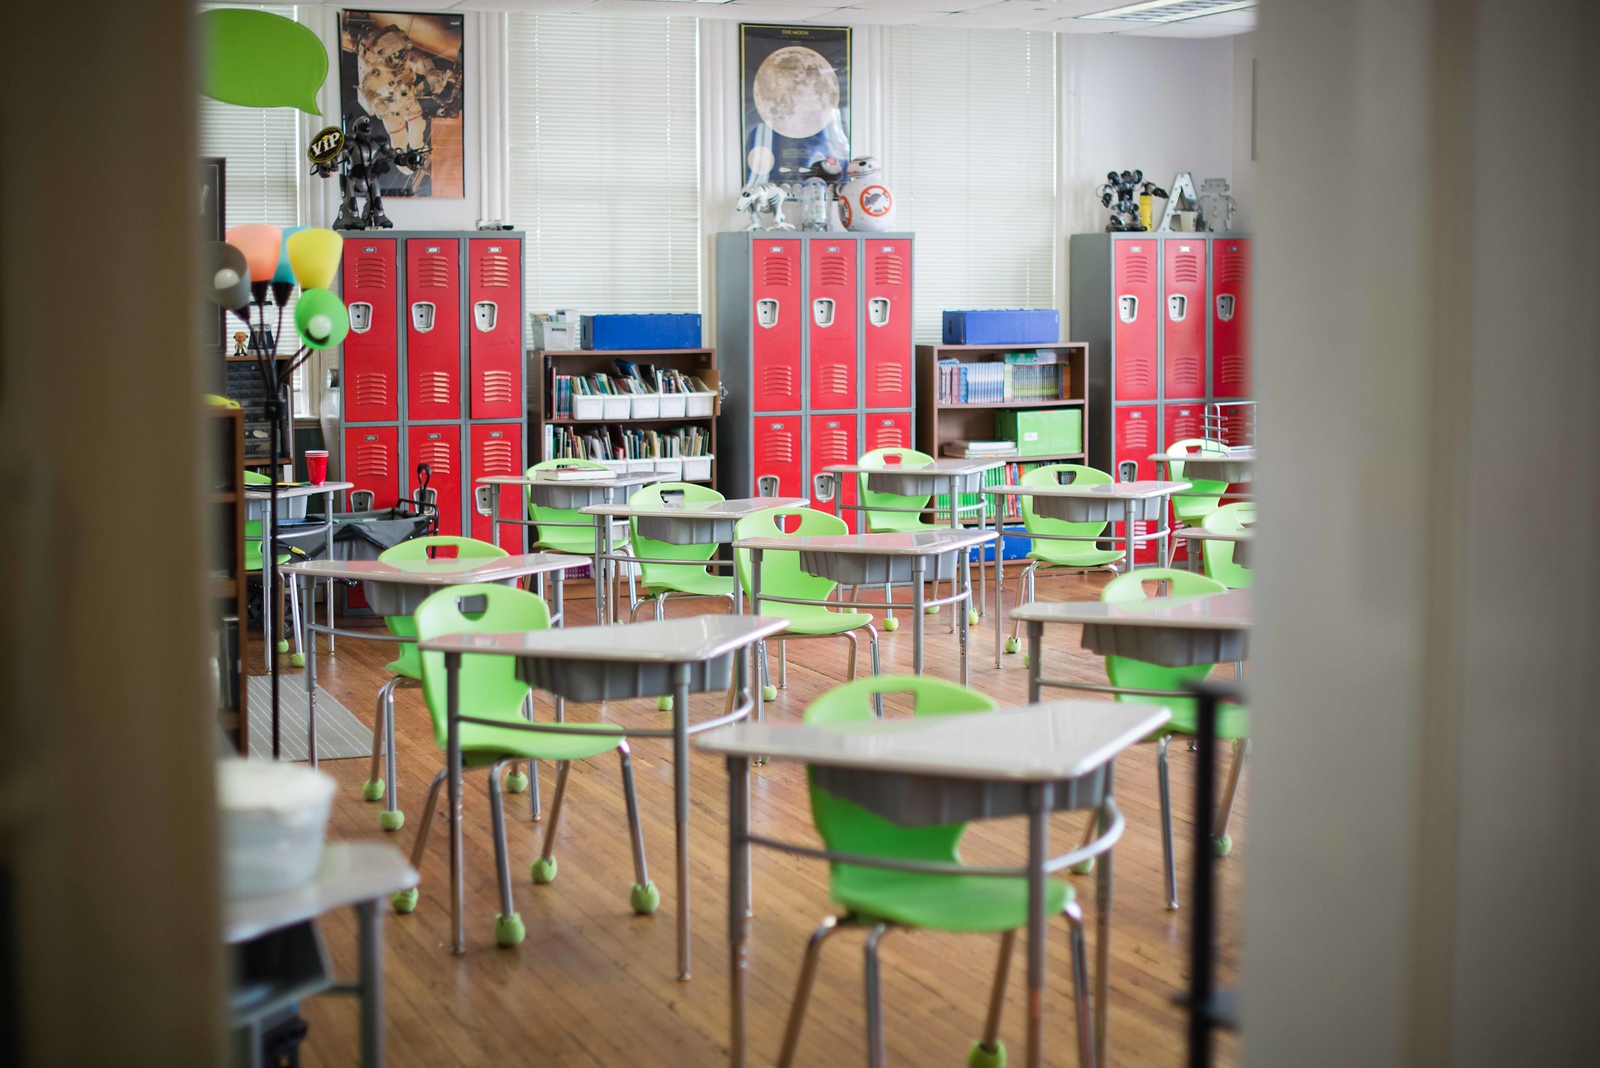 Elementary school classroom with desks, lockers, science equipment